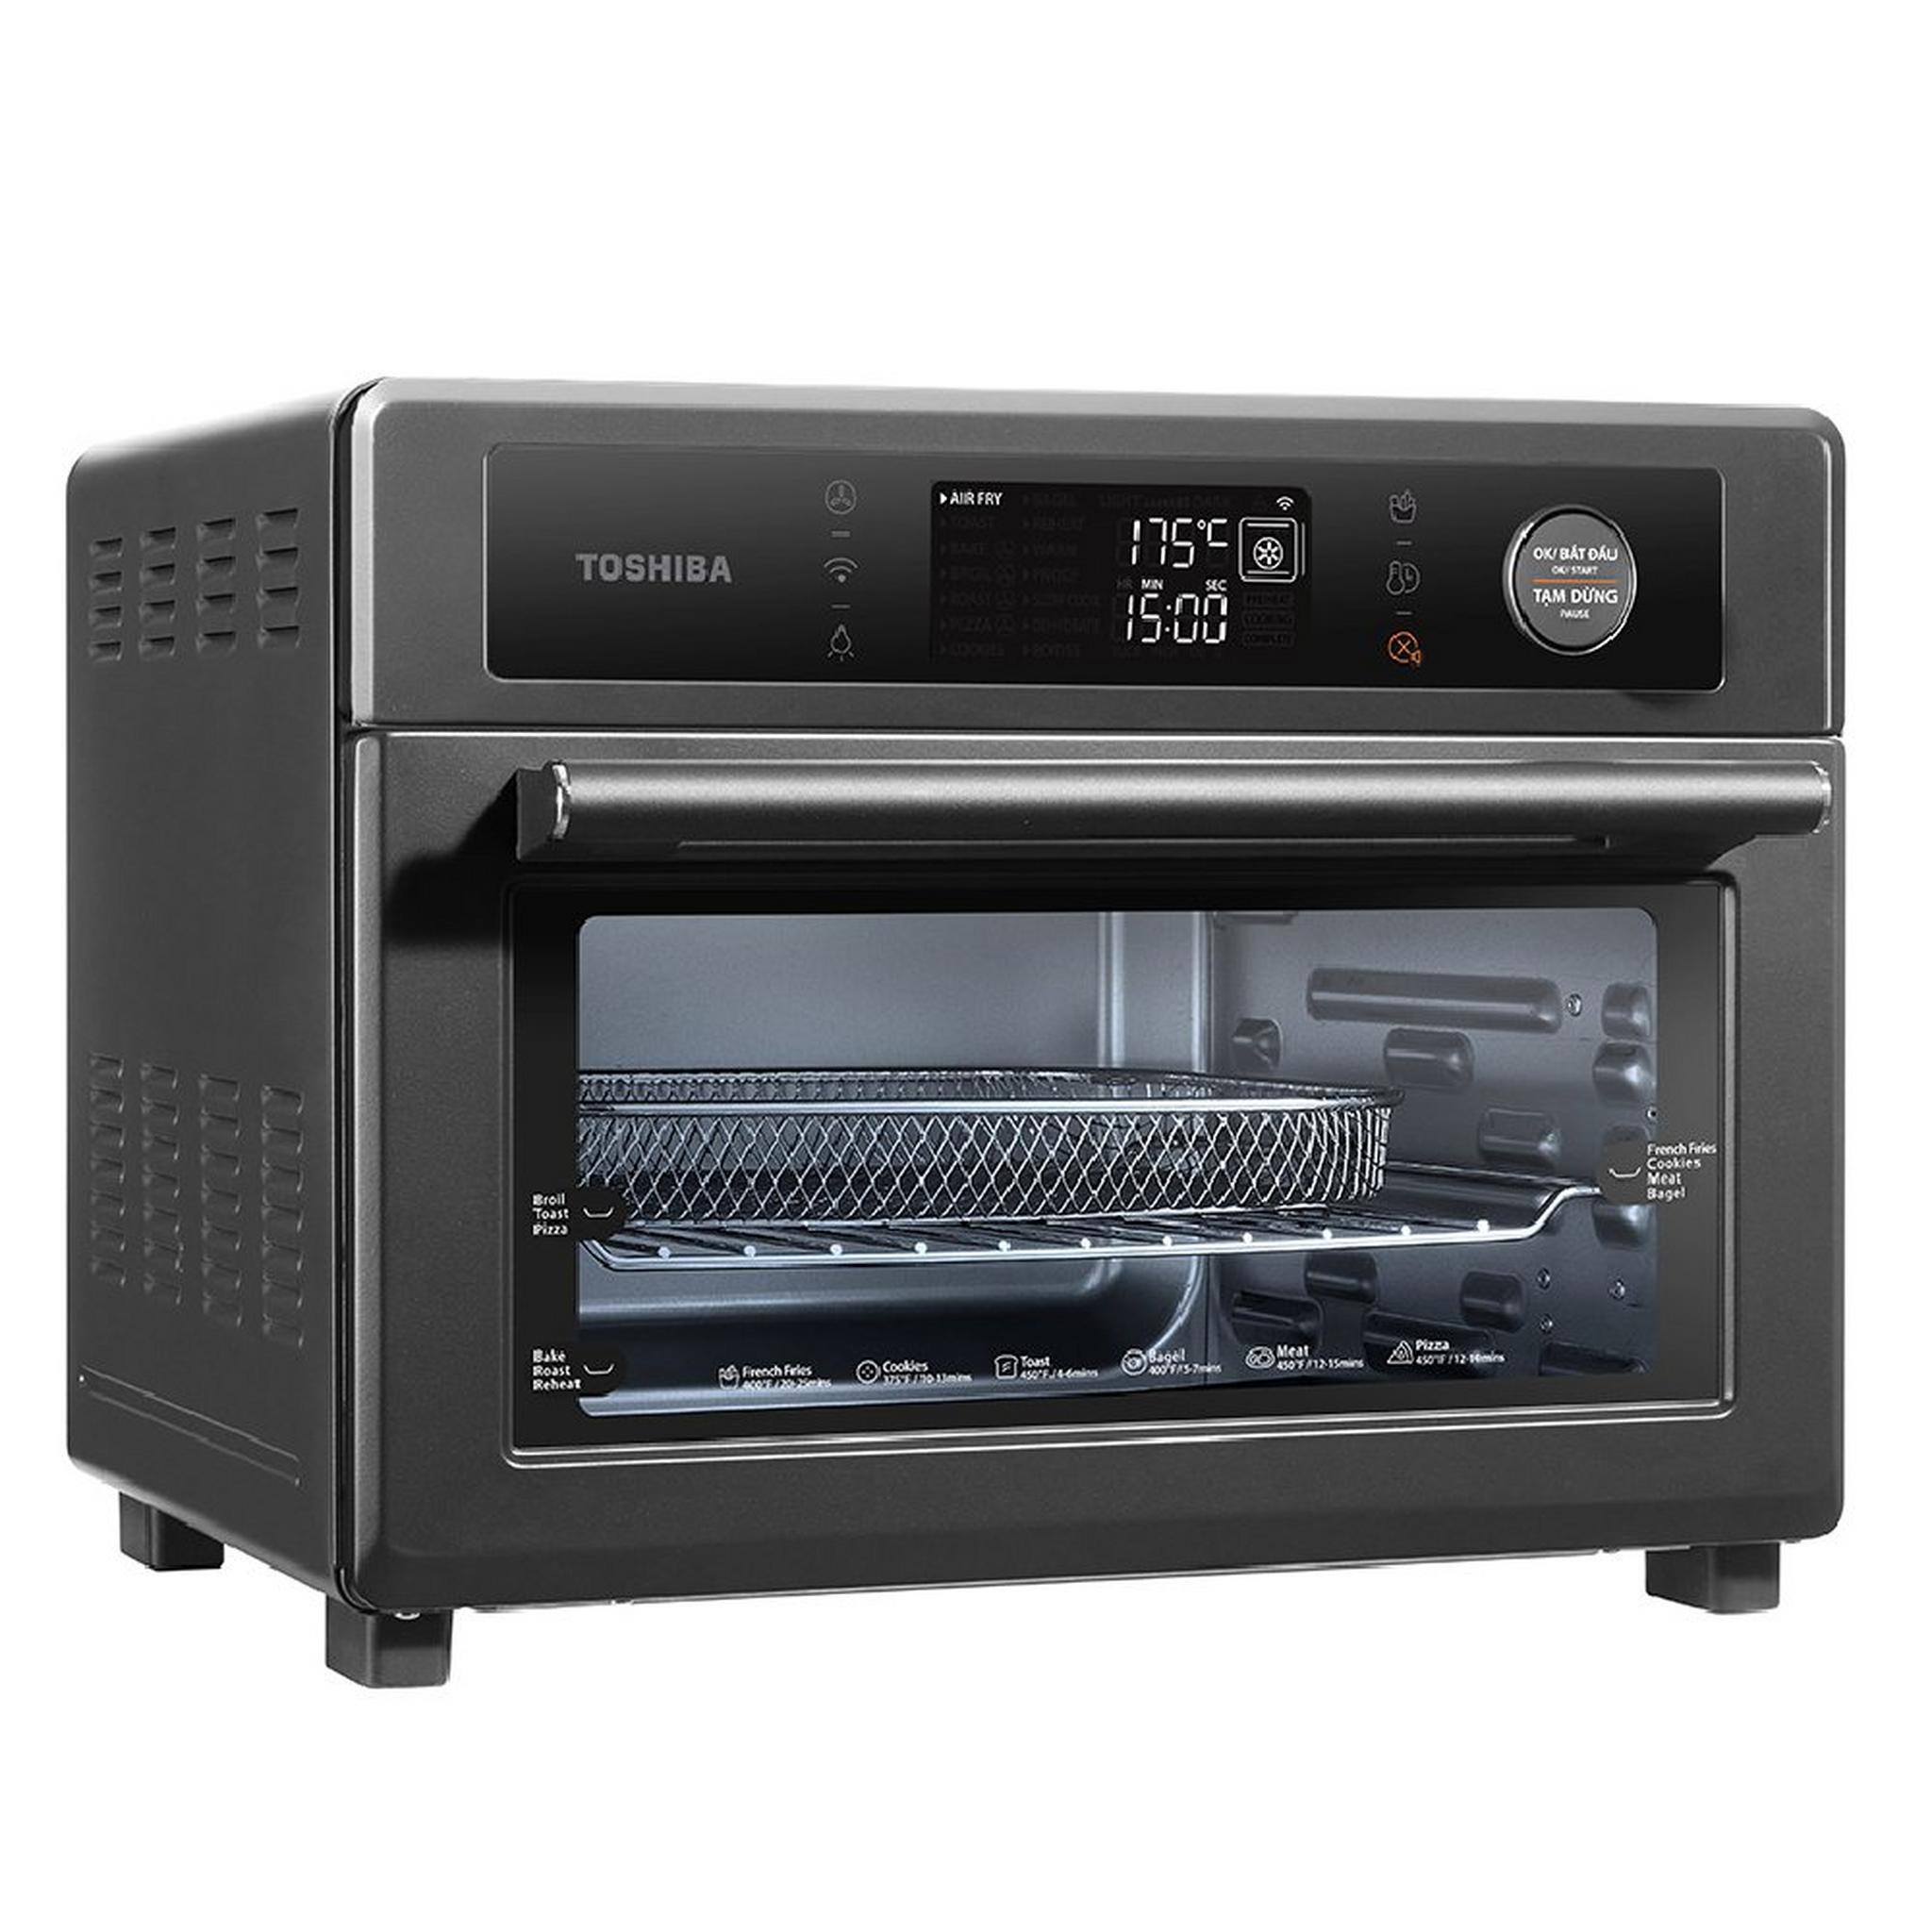 Toshiba Air Fryer Toaster Oven, 1750W, 25L, TL2-SAC25GZE – Black